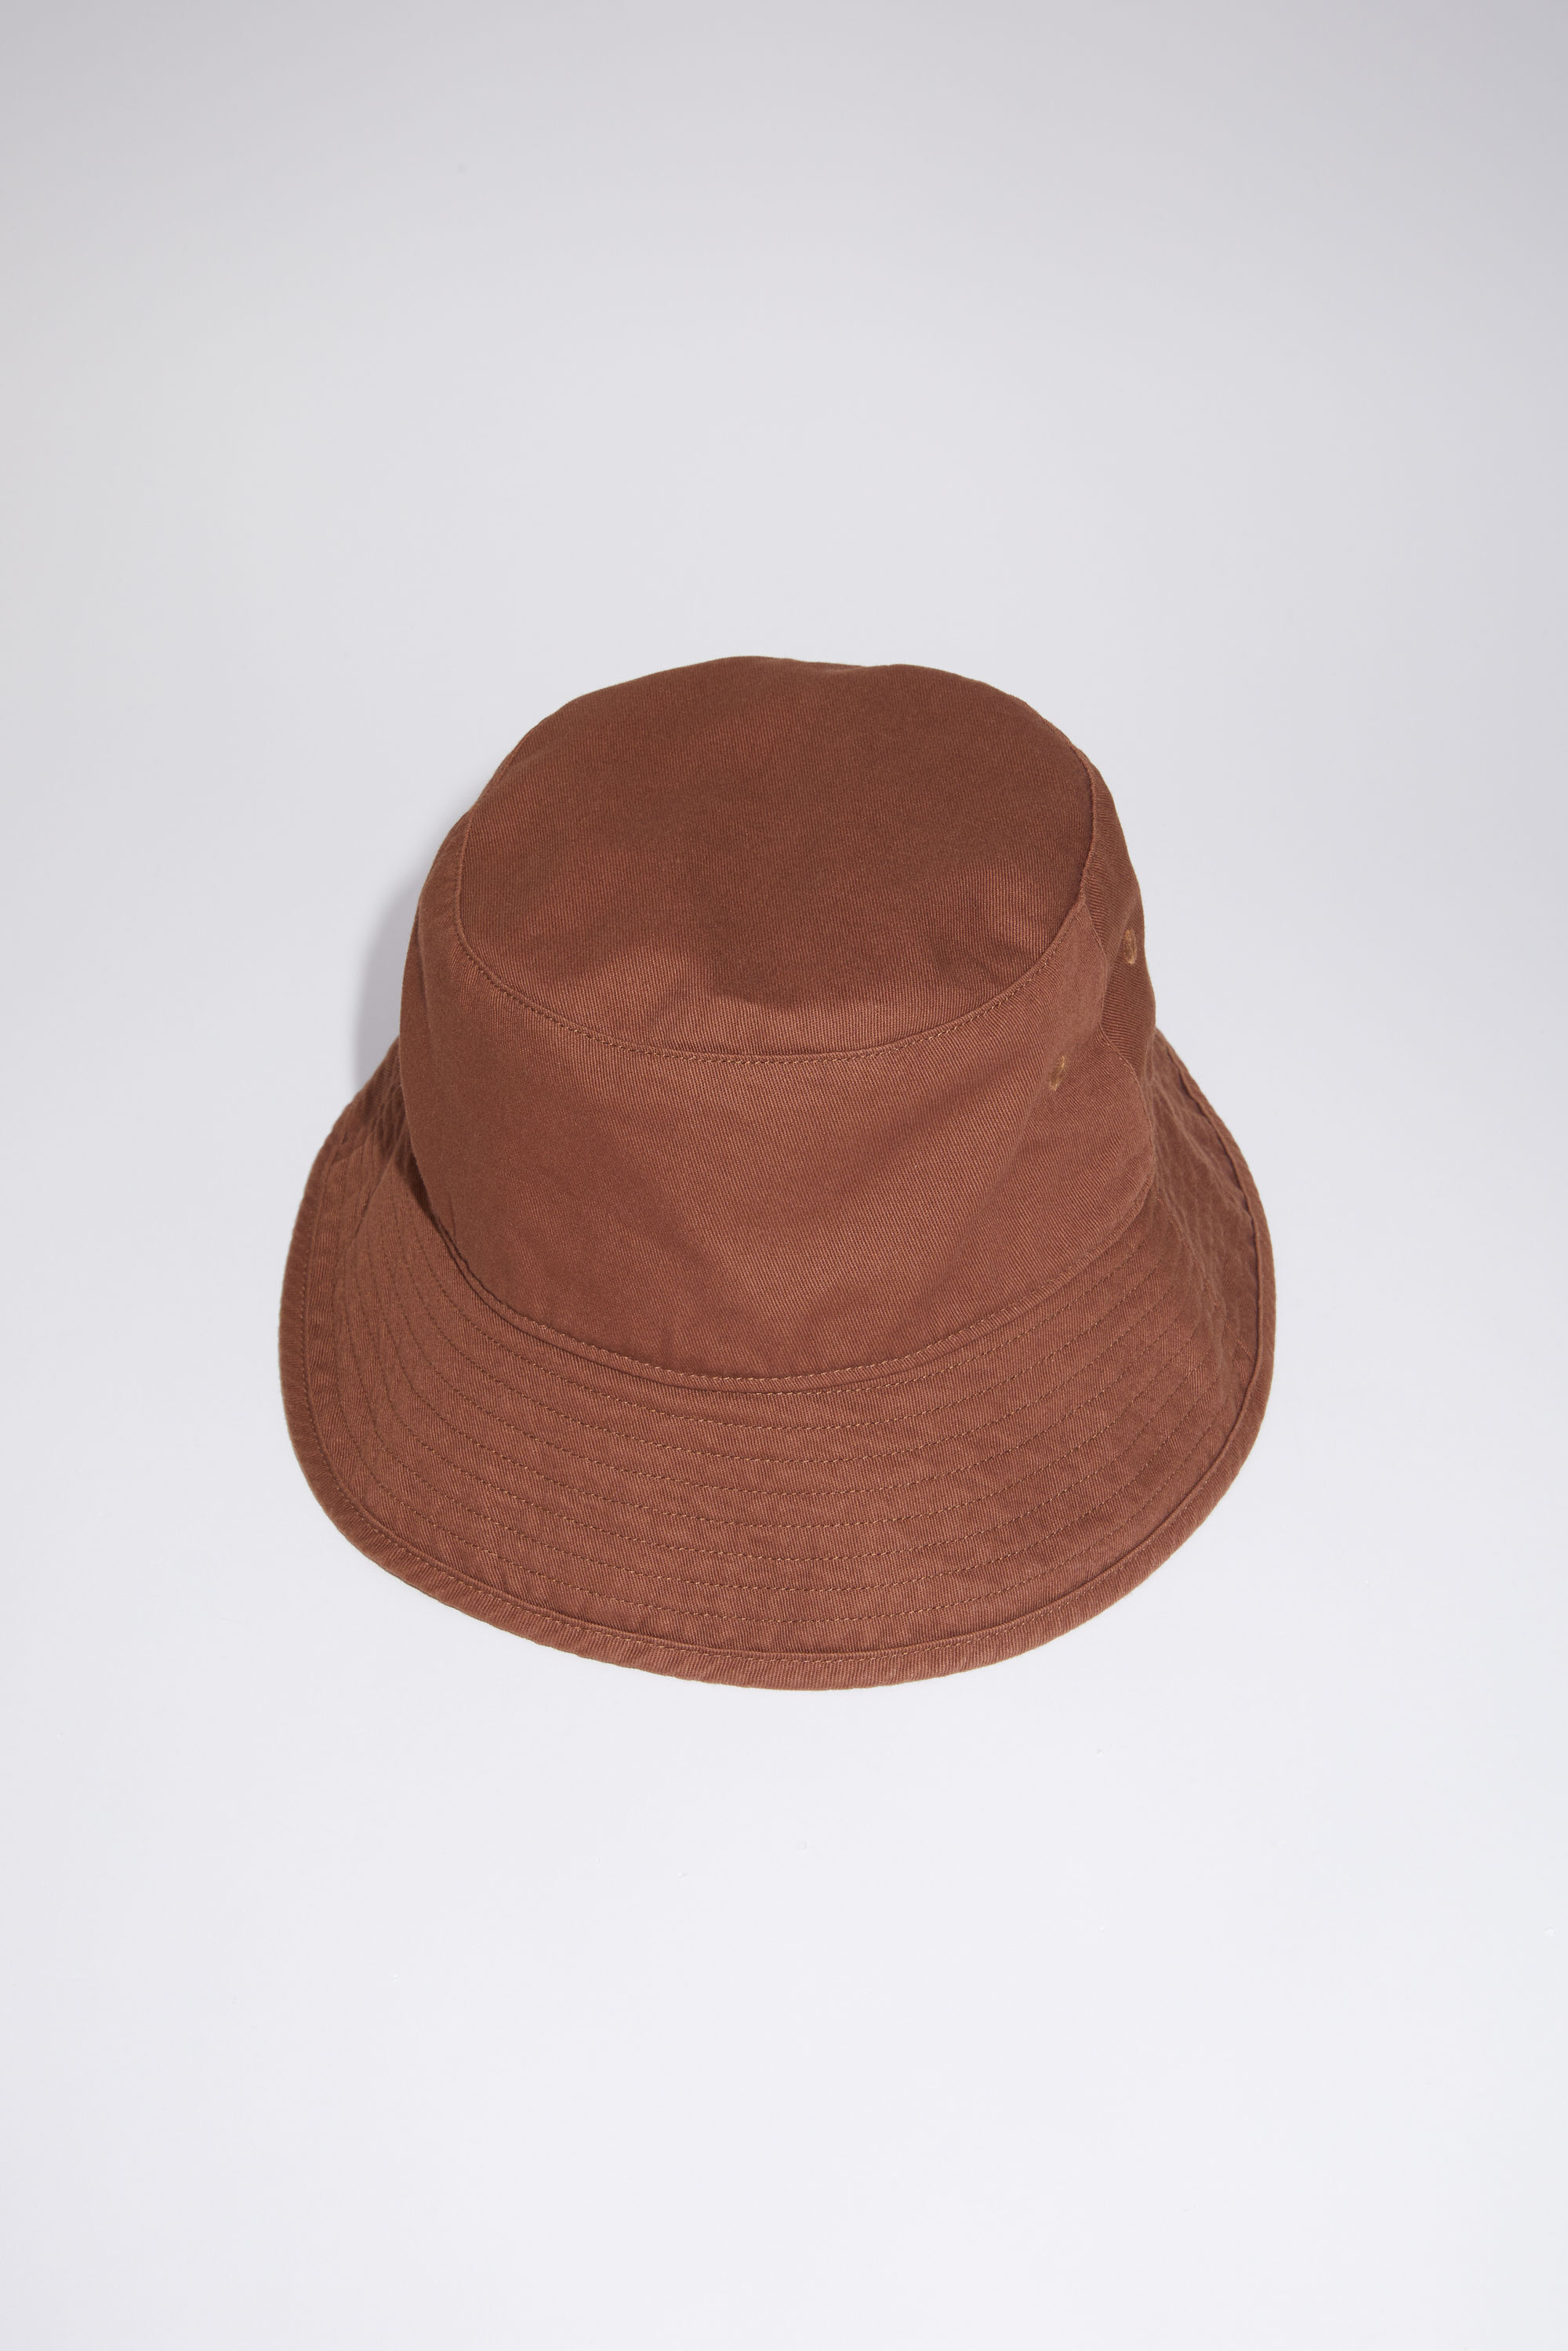 Acne Studios - Twill bucket hat - Black